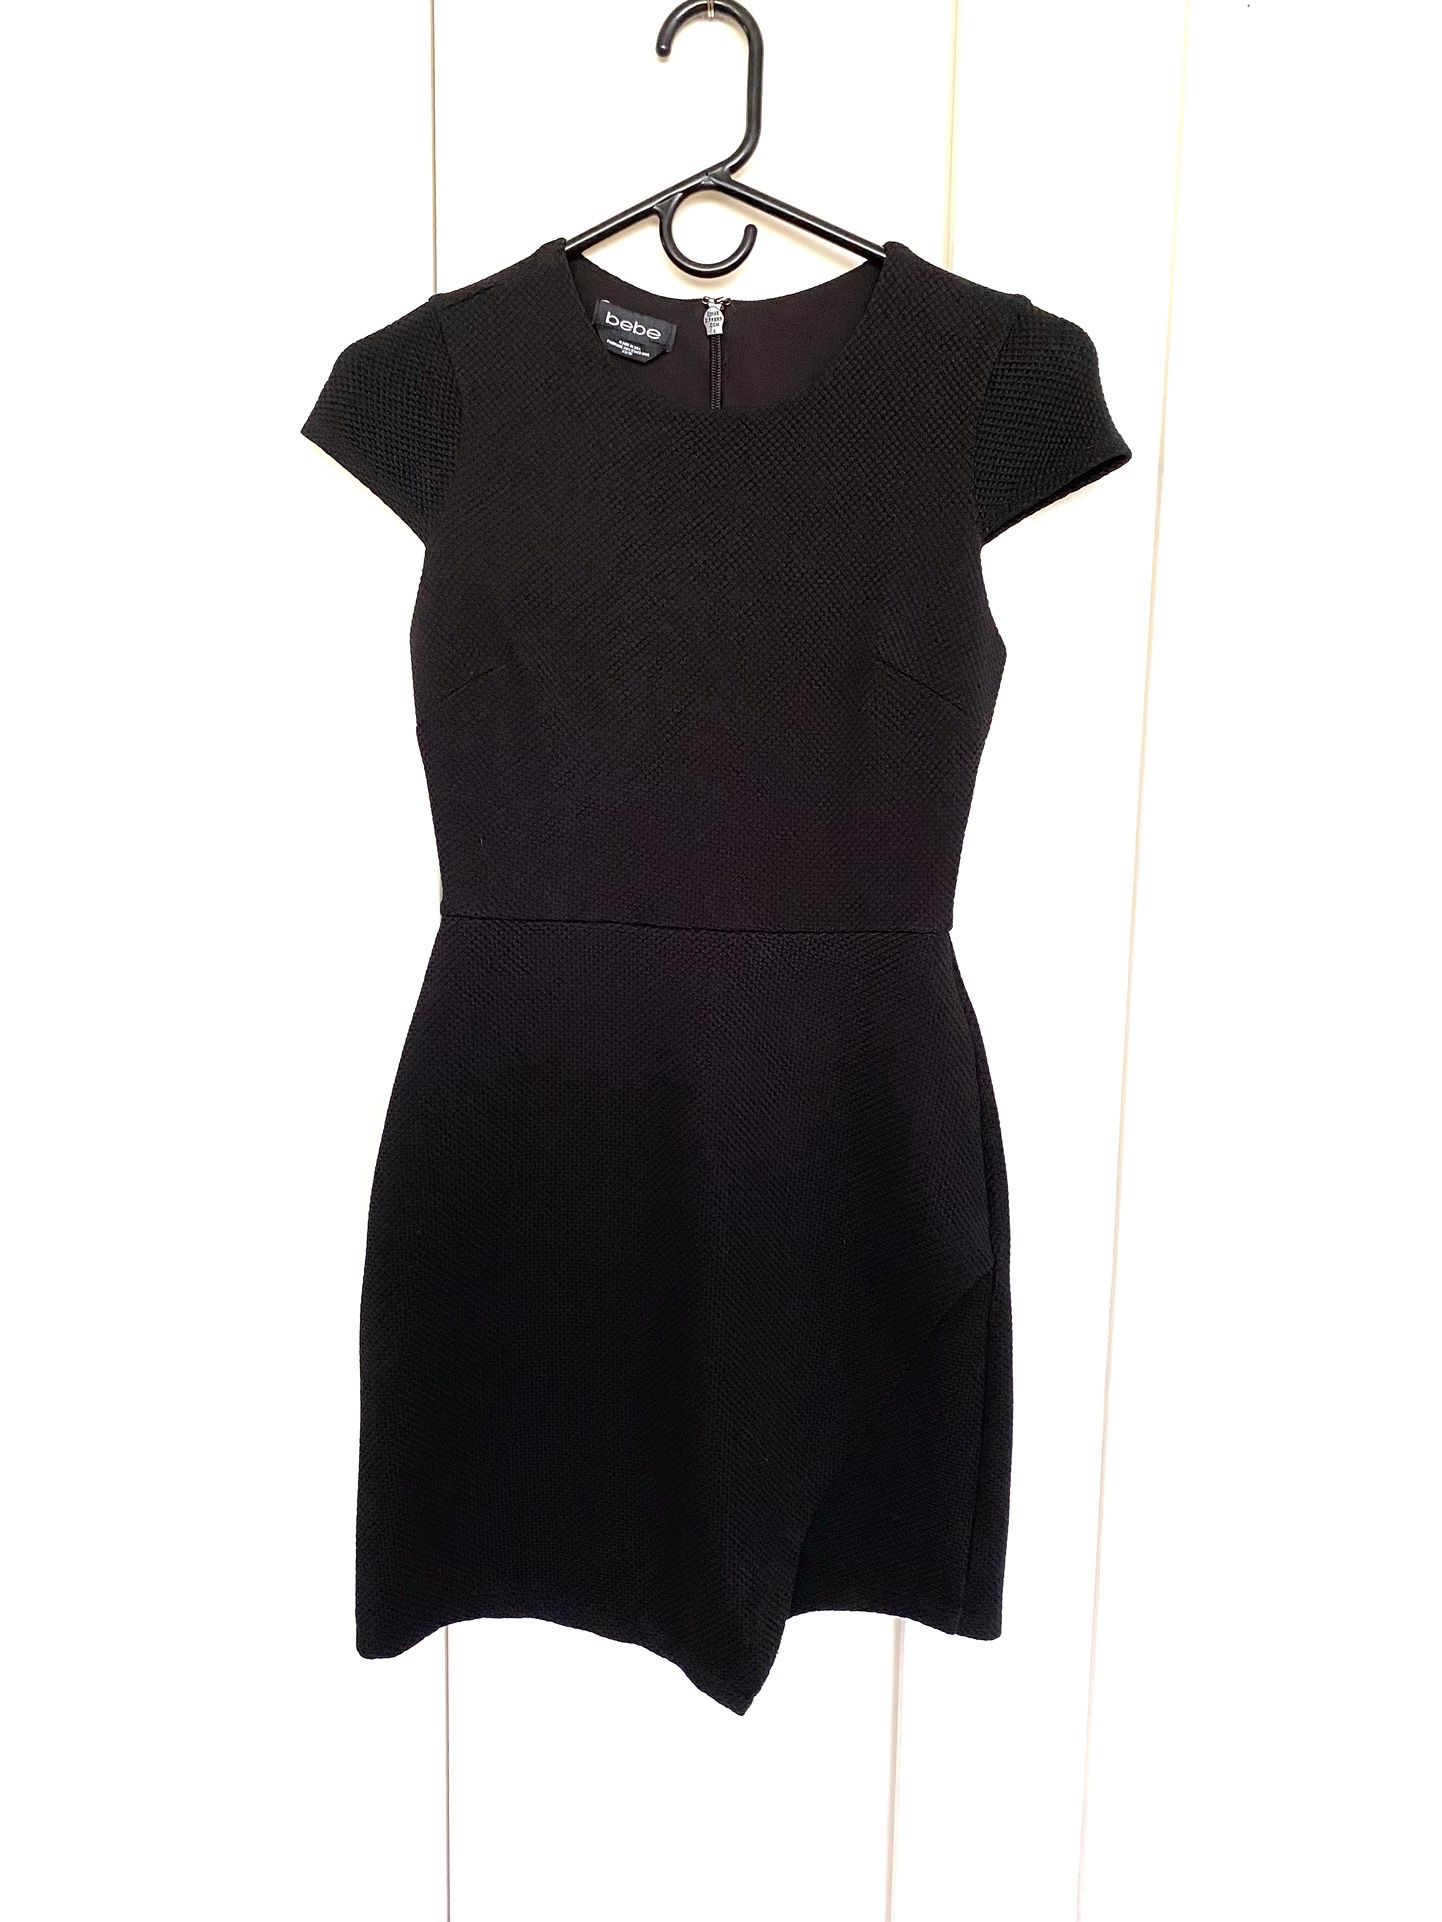 Bebe Black Cap Sleeve Textured Shift Dress - Size XS